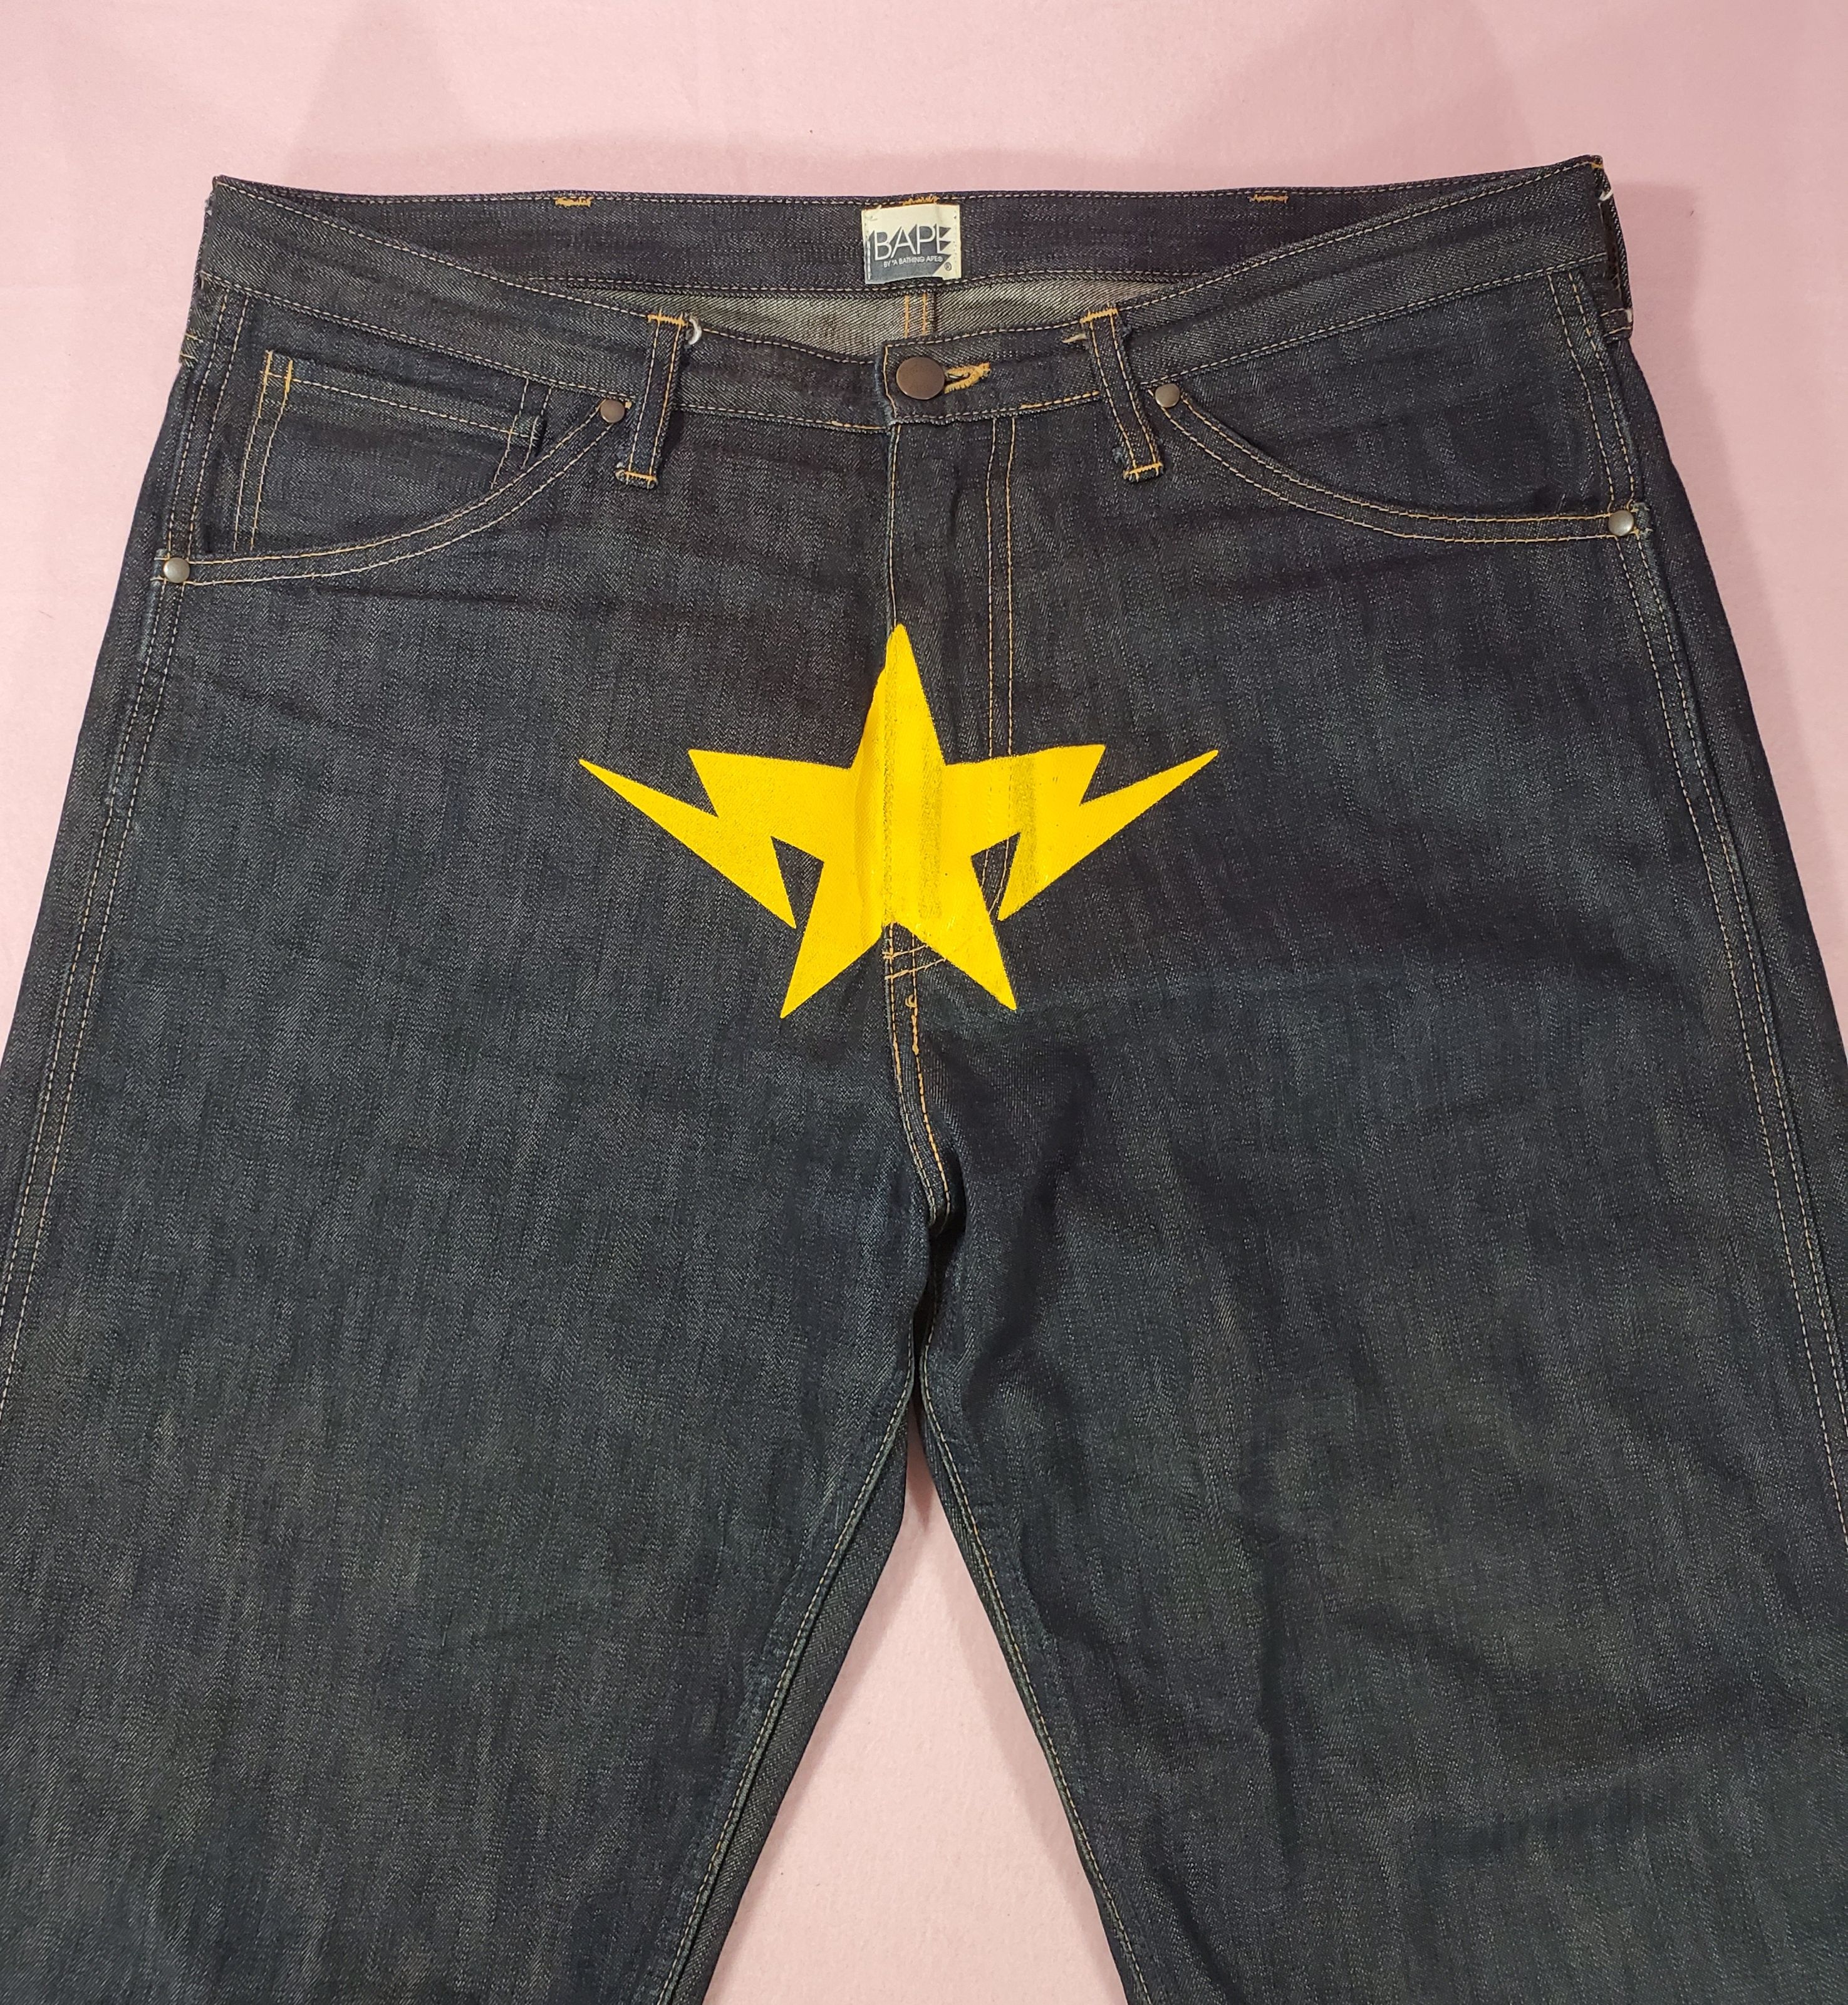 Bape Bape Twinsta STA Yellow Print Dark Denim Jeans XL Bapesta Size US 38 / EU 54 - 1 Preview